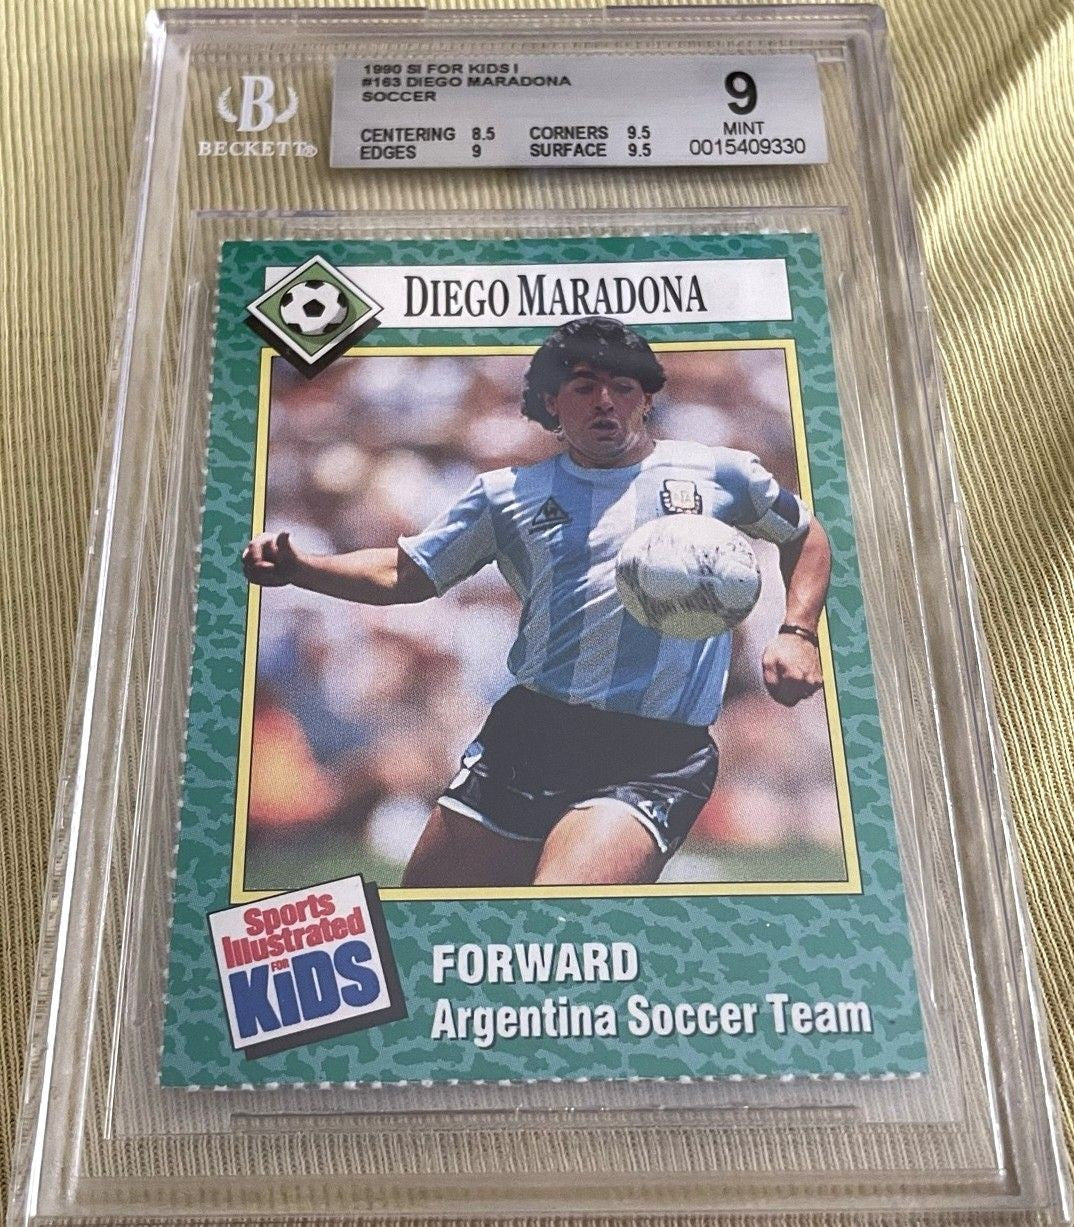 Diego Maradona 1990 Sports Illustrated for Kids soccer card BGS graded 9 MINT